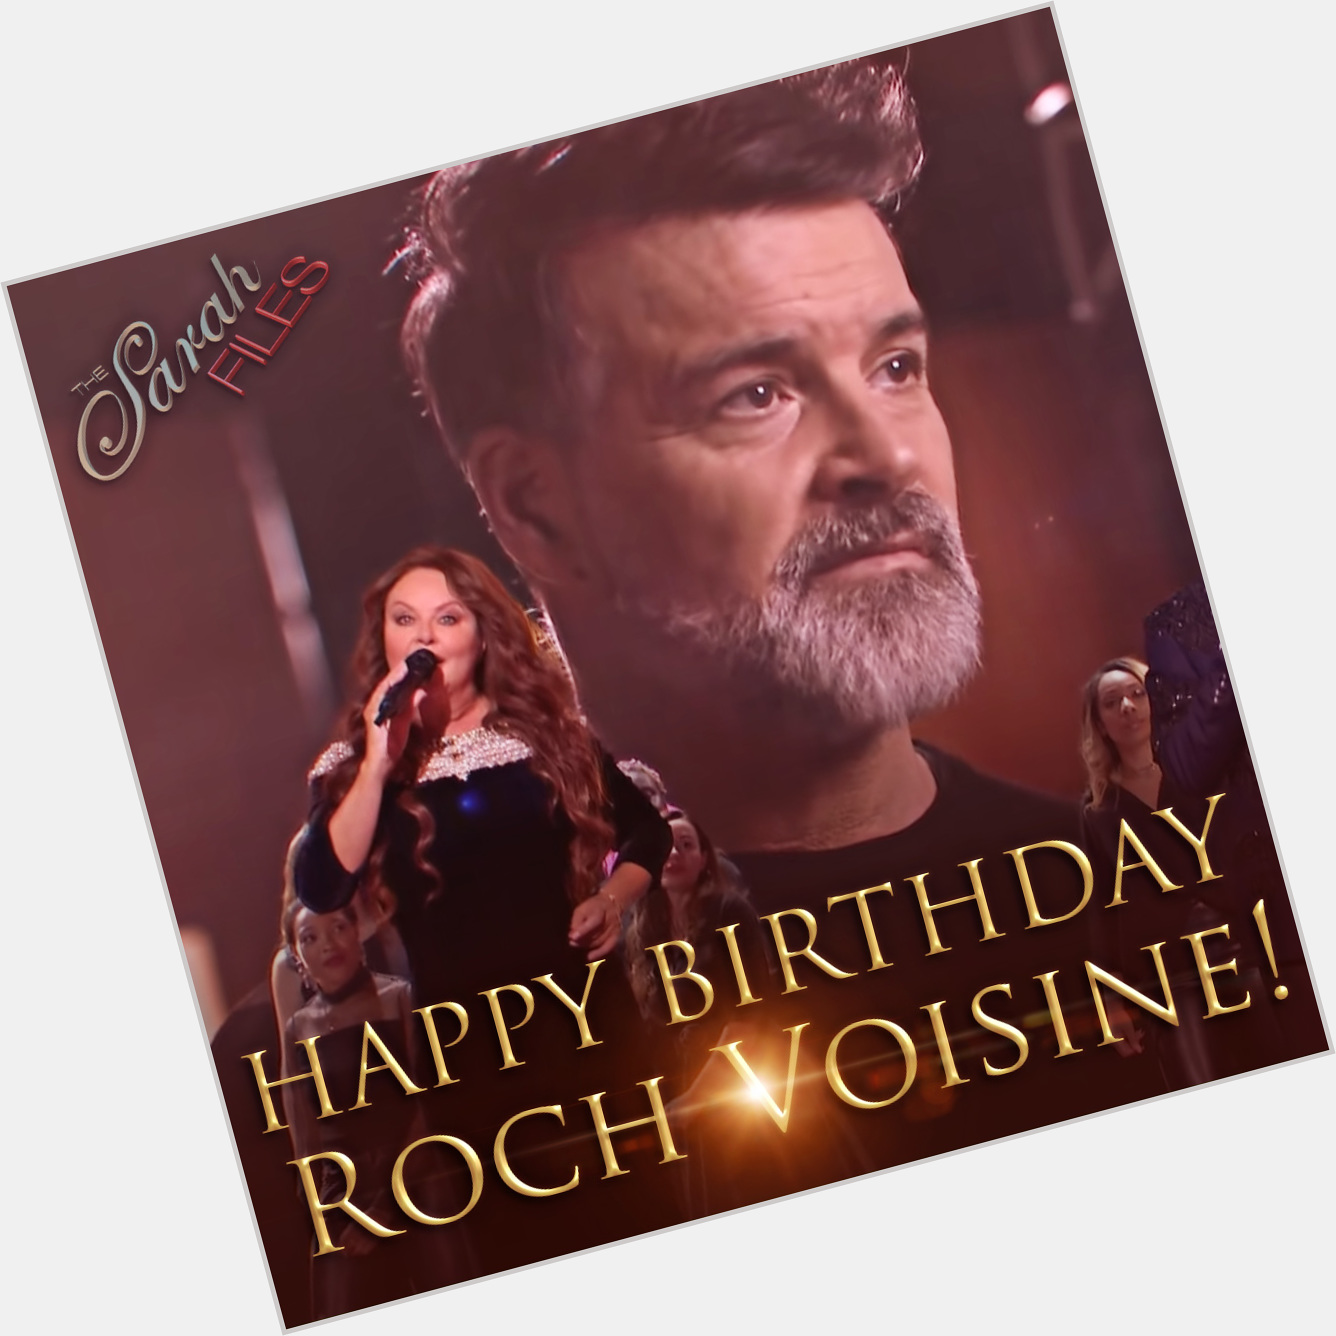 Happy Birthday Roch Voisine!       